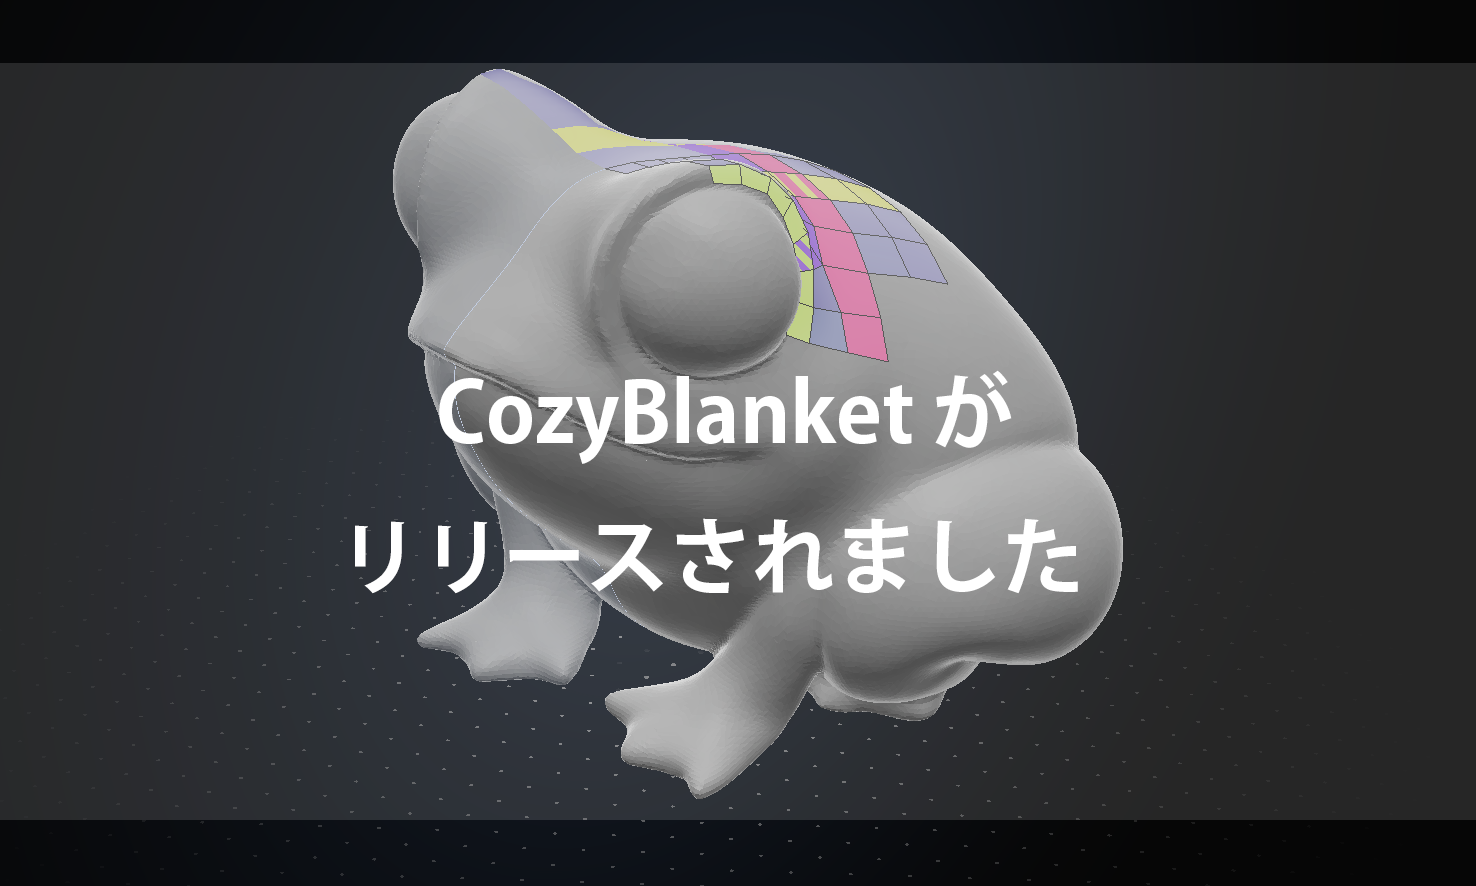 CozyBlanket がリリースされました